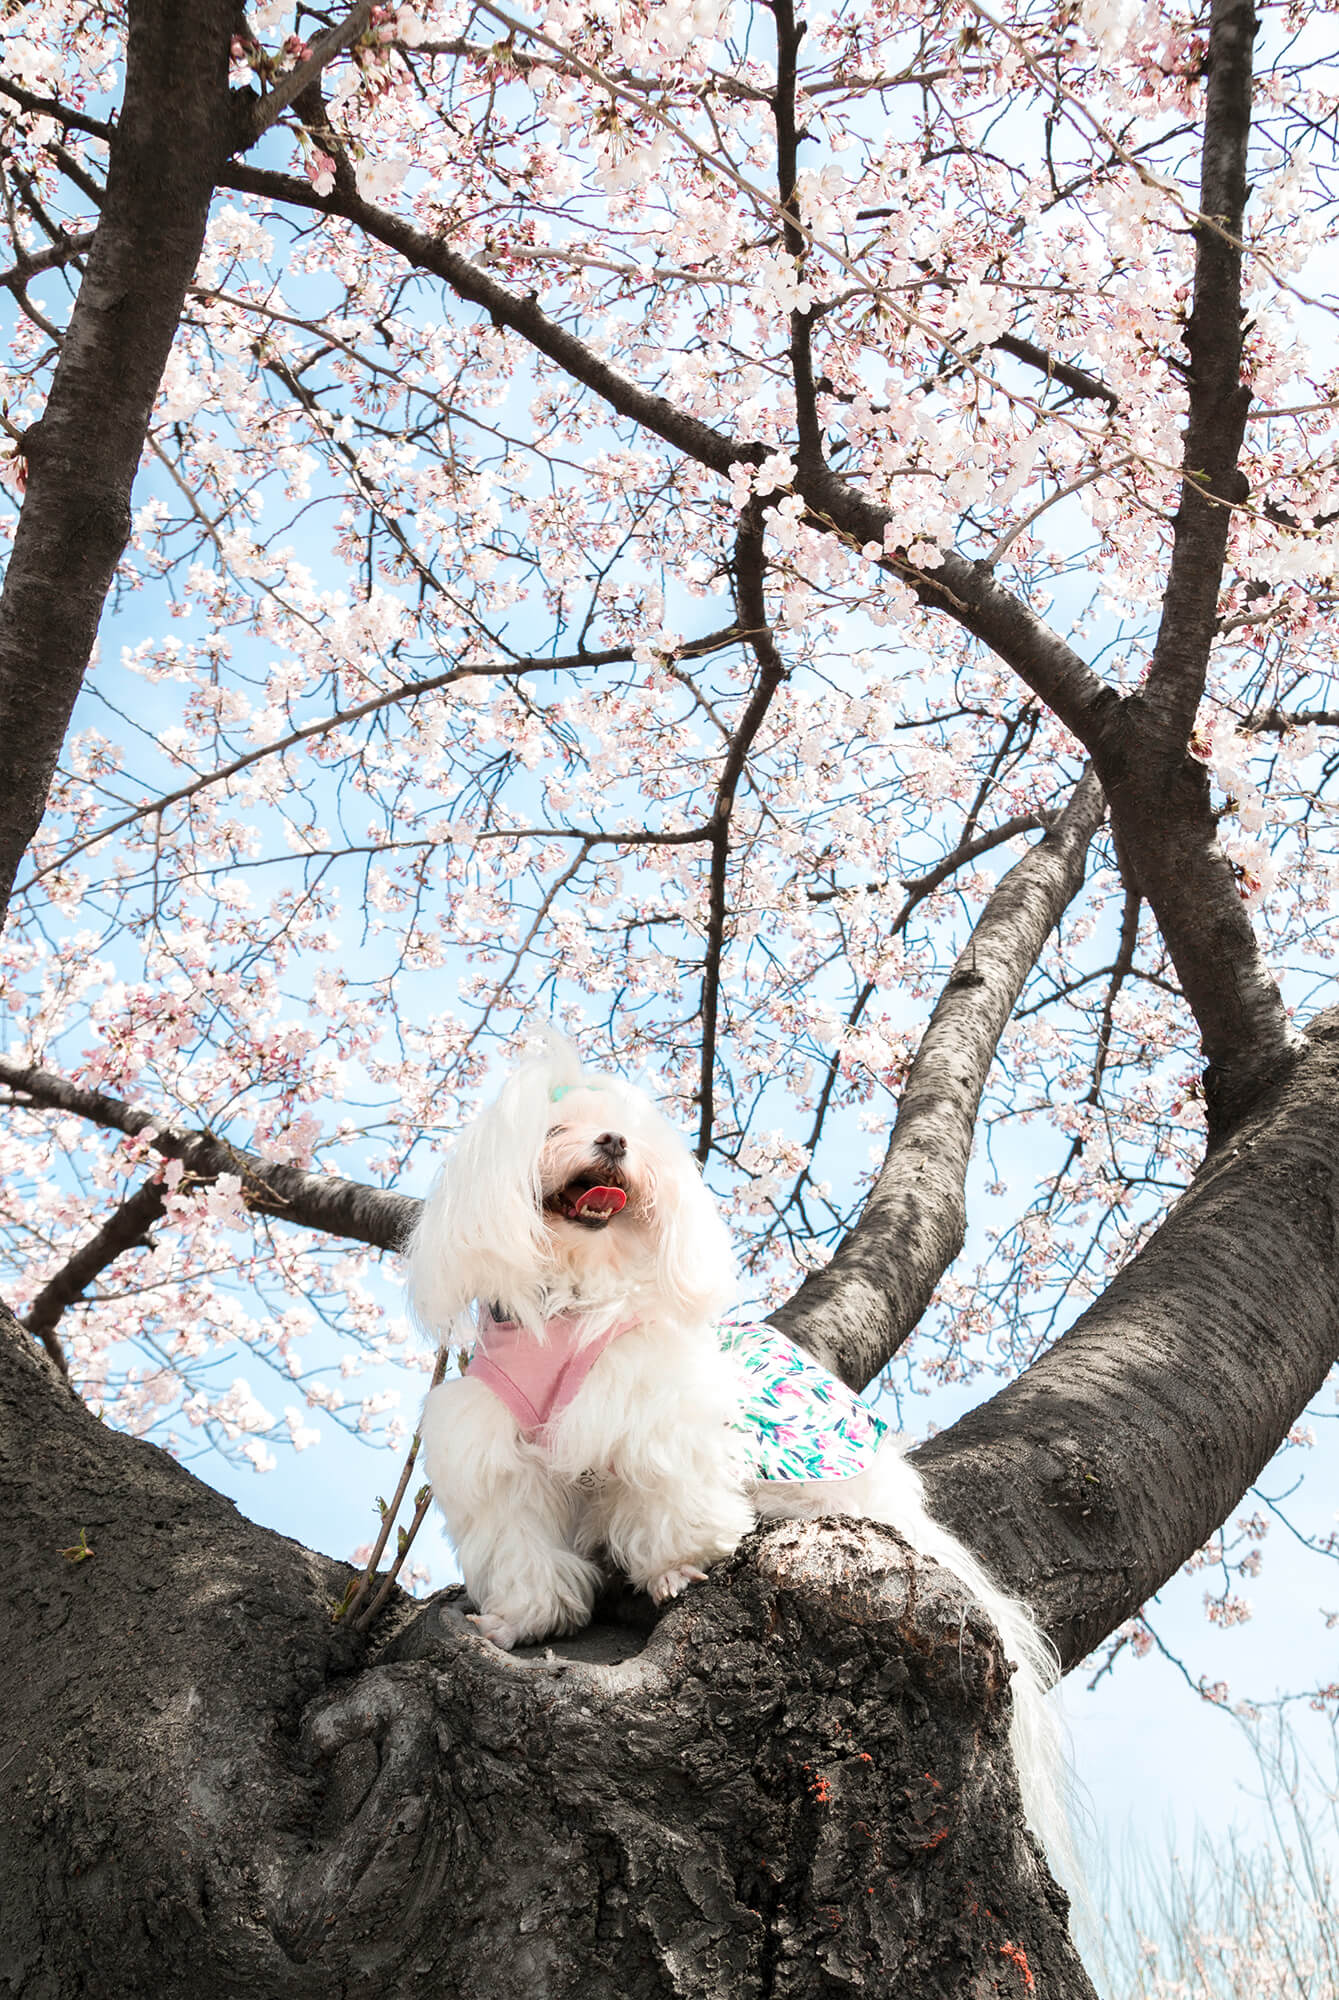 Yeouido Spring Flower Festival – Yeouido Cherry Blossom Festival